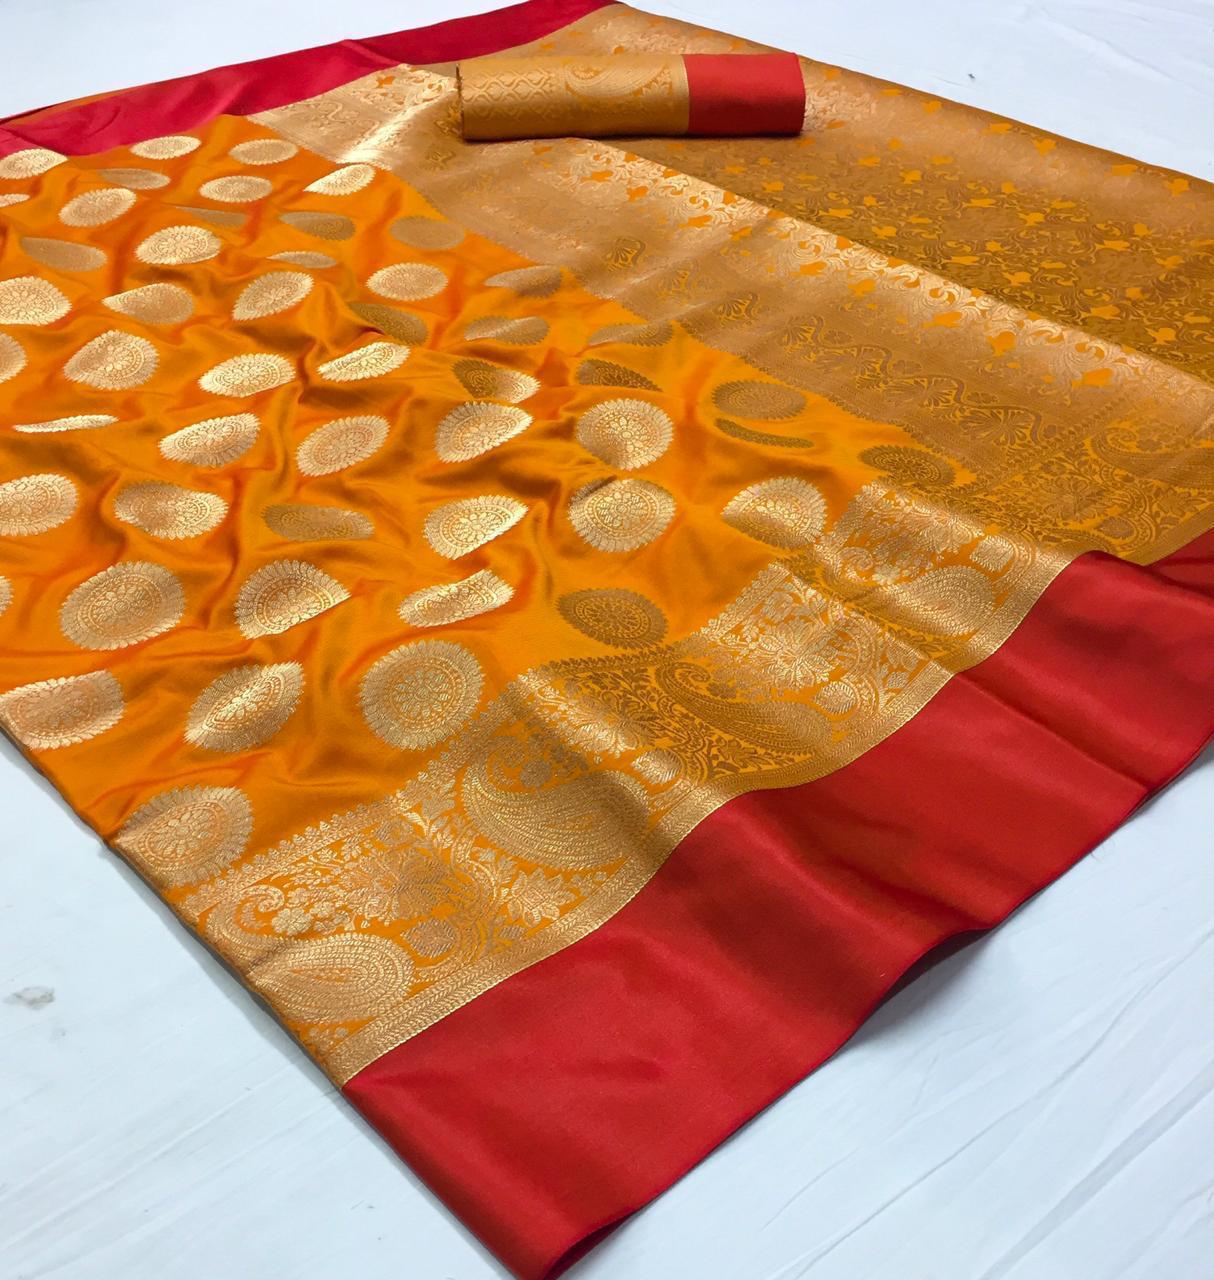 Rajtex Presents Kanishka Silk Traditional Wear Handloom Silk Sarees Catalog Wholeslaer